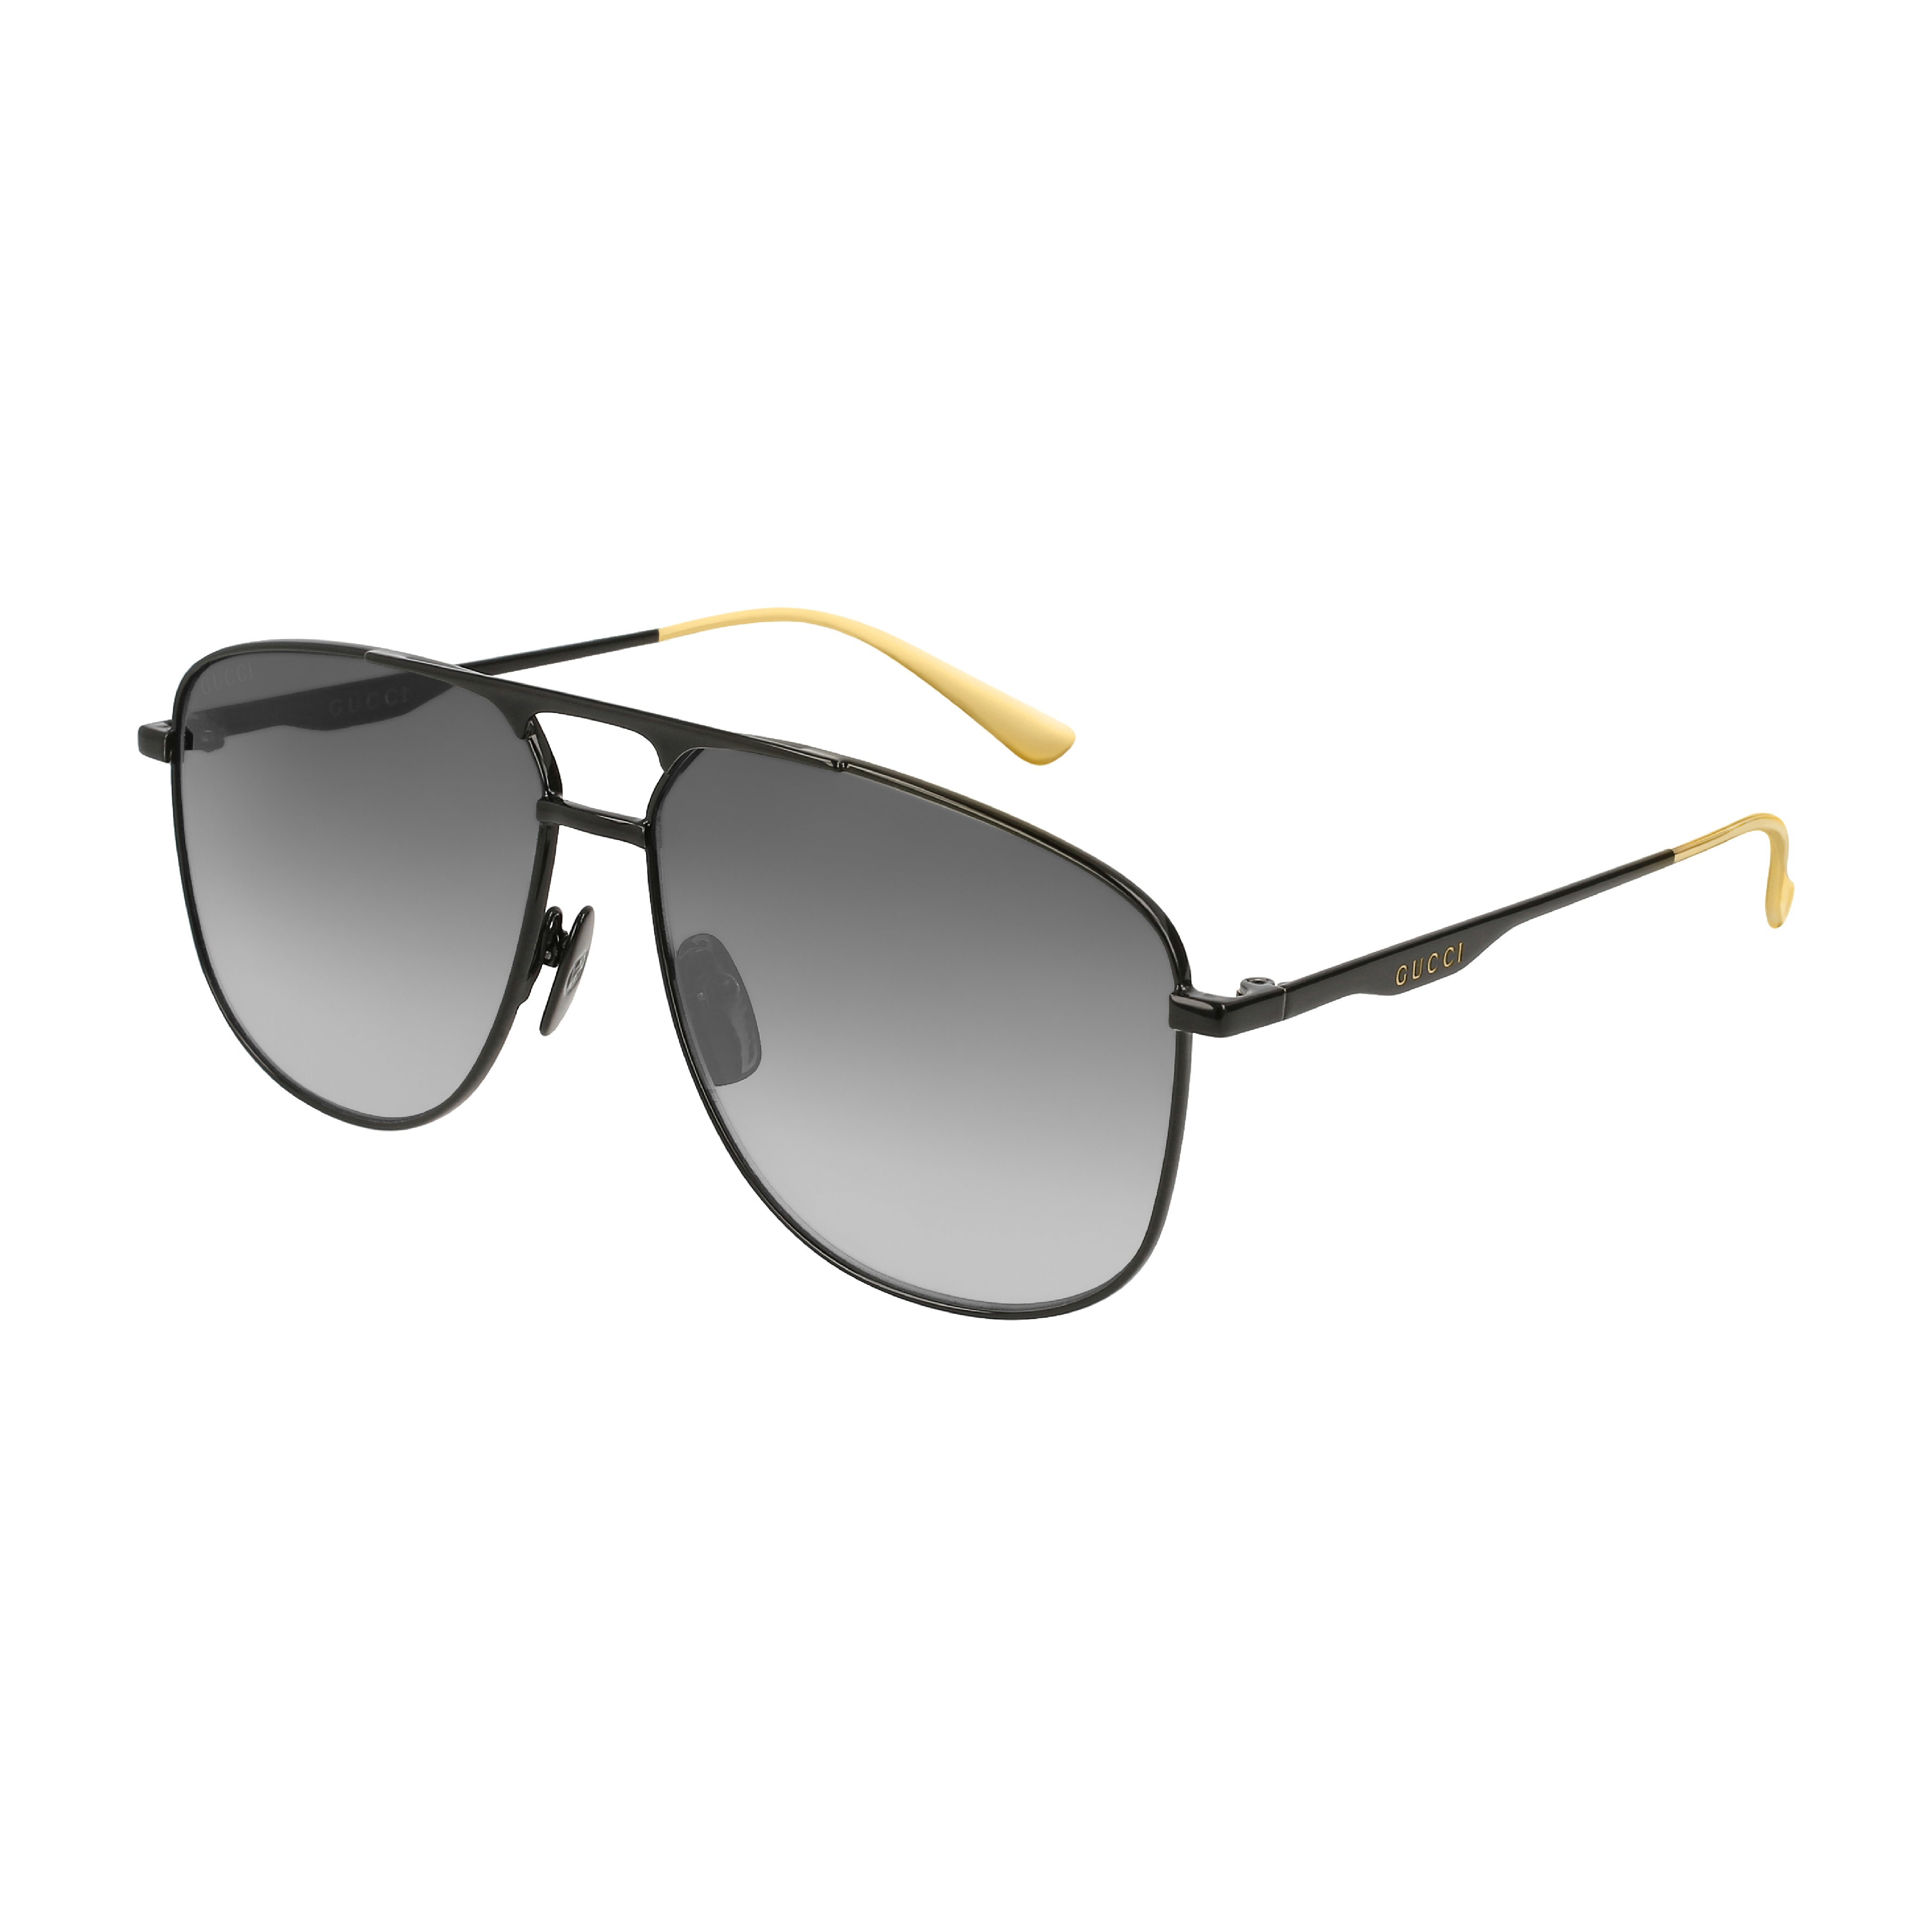 Gucci GG0336S-002 <br> Pilot / Navigator Sunglasses